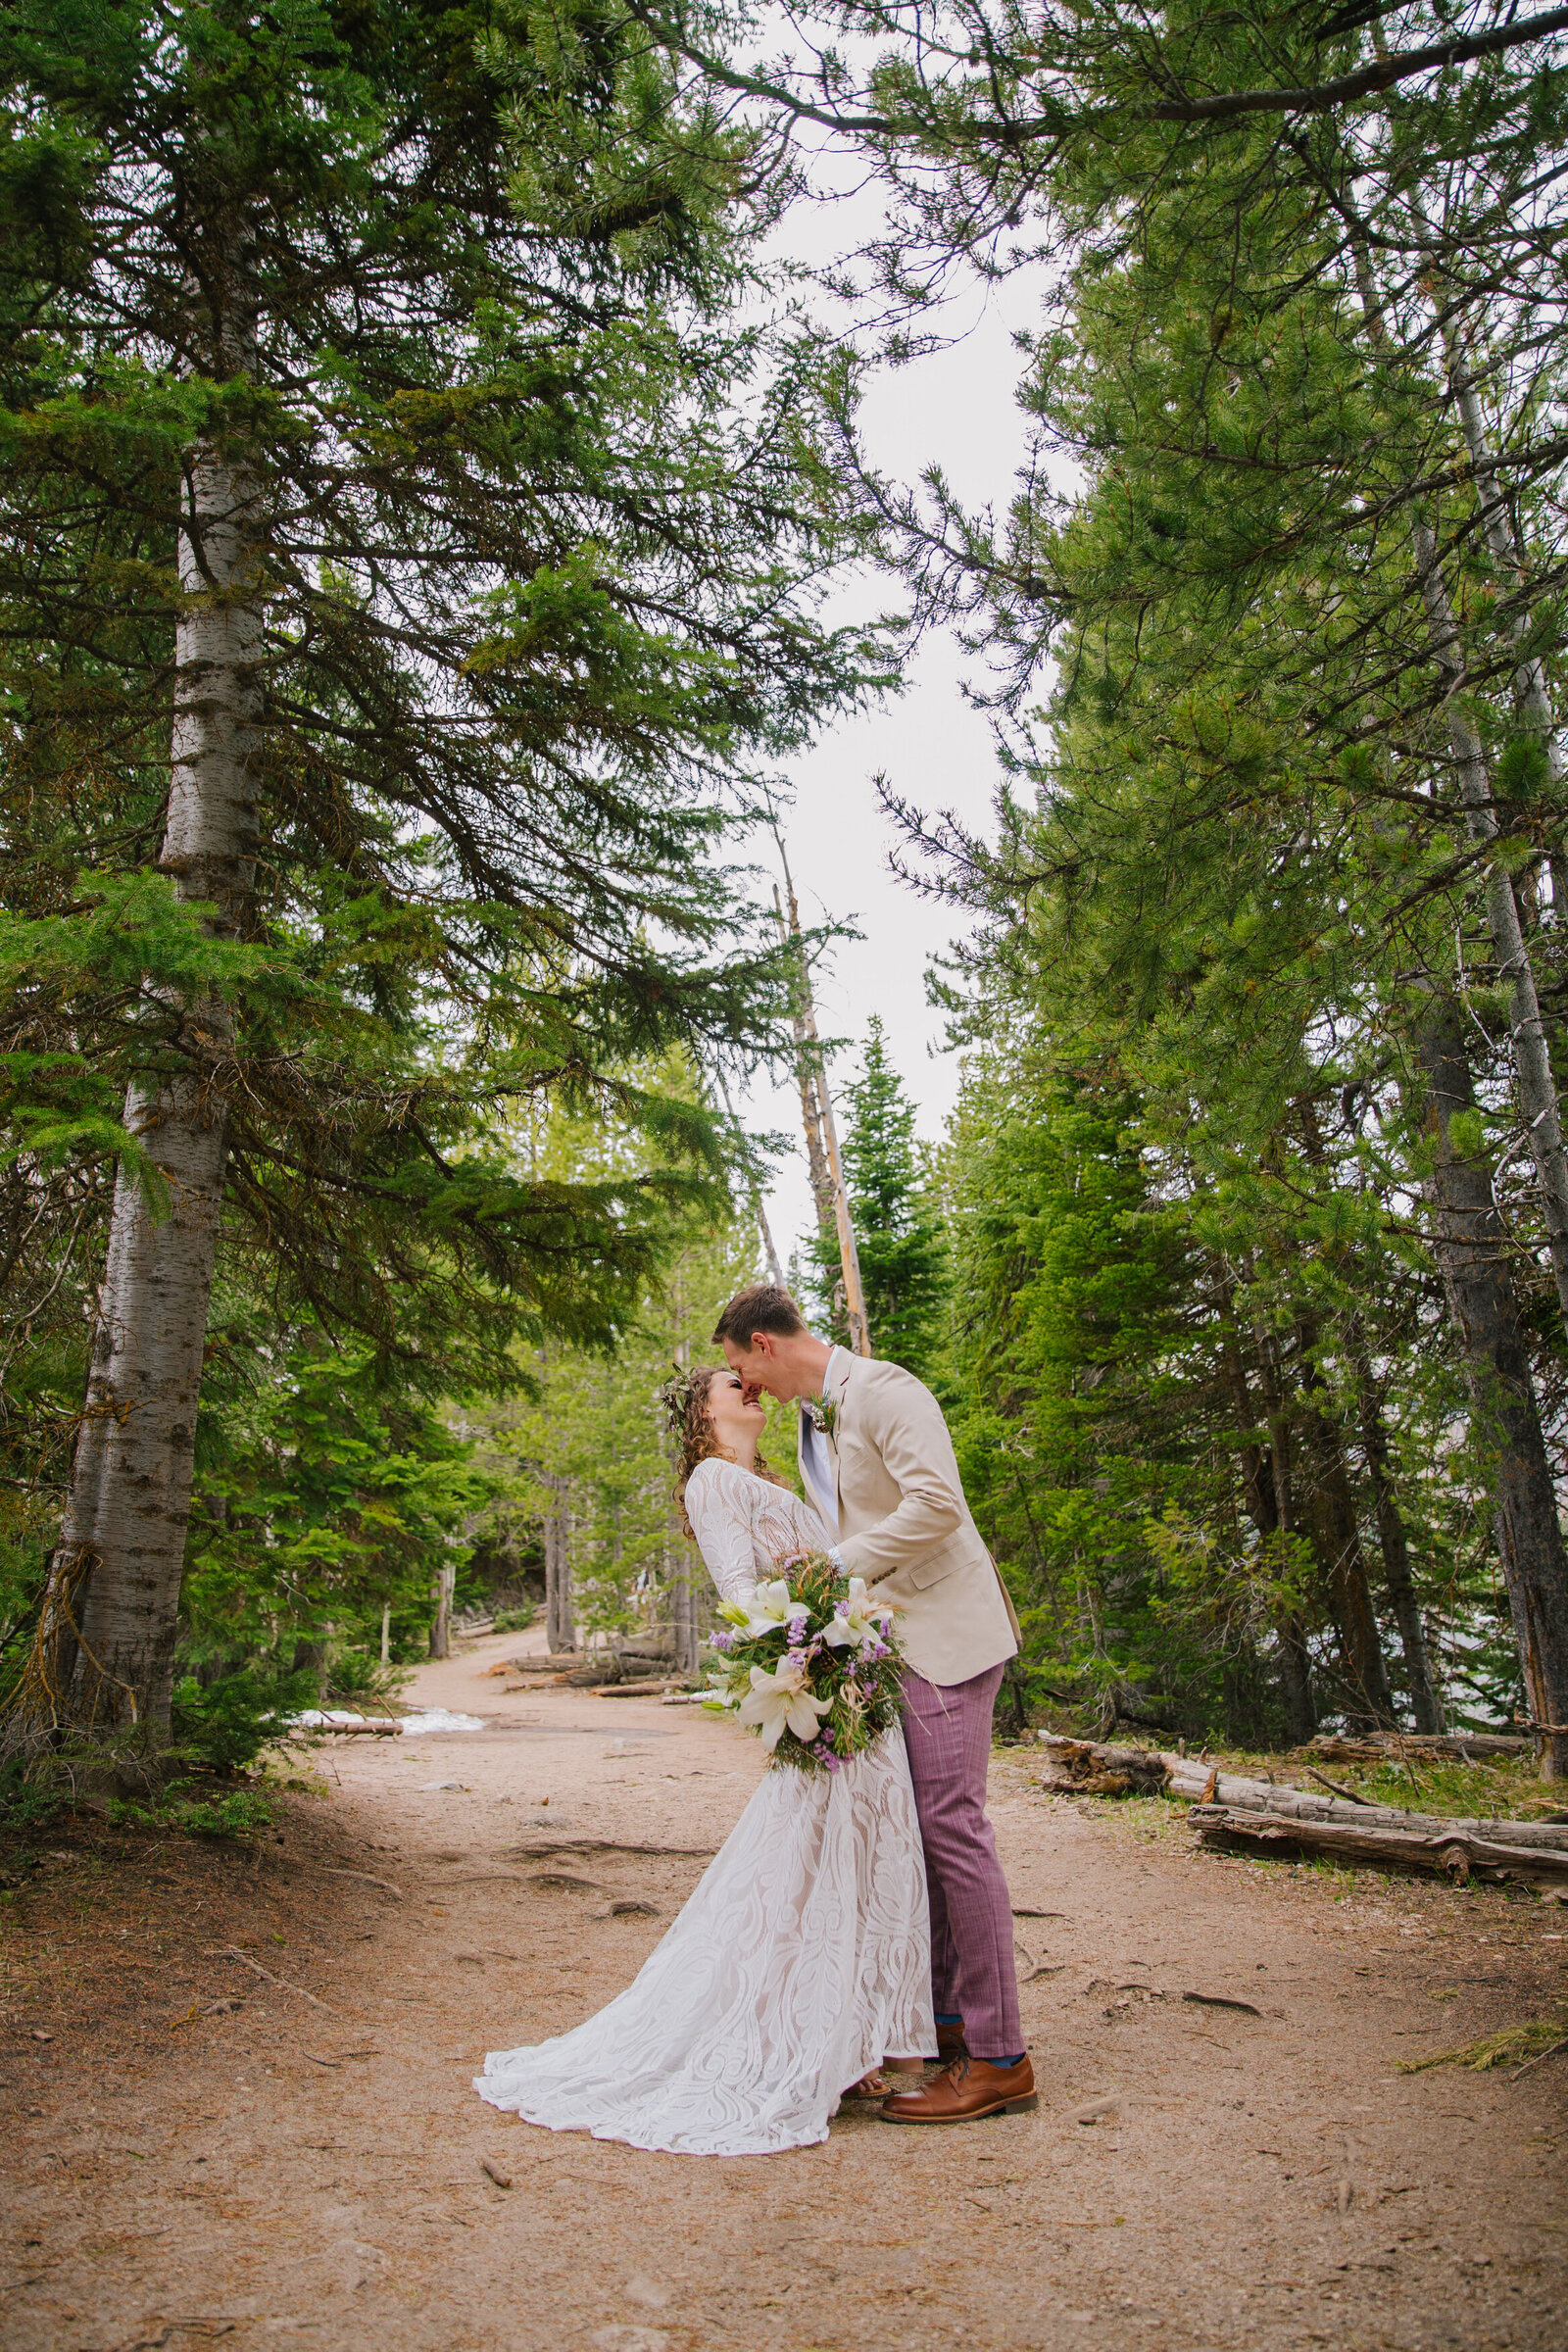 Jackson Hole videographer captures bride and groom kissing after Jackson Hole elopement